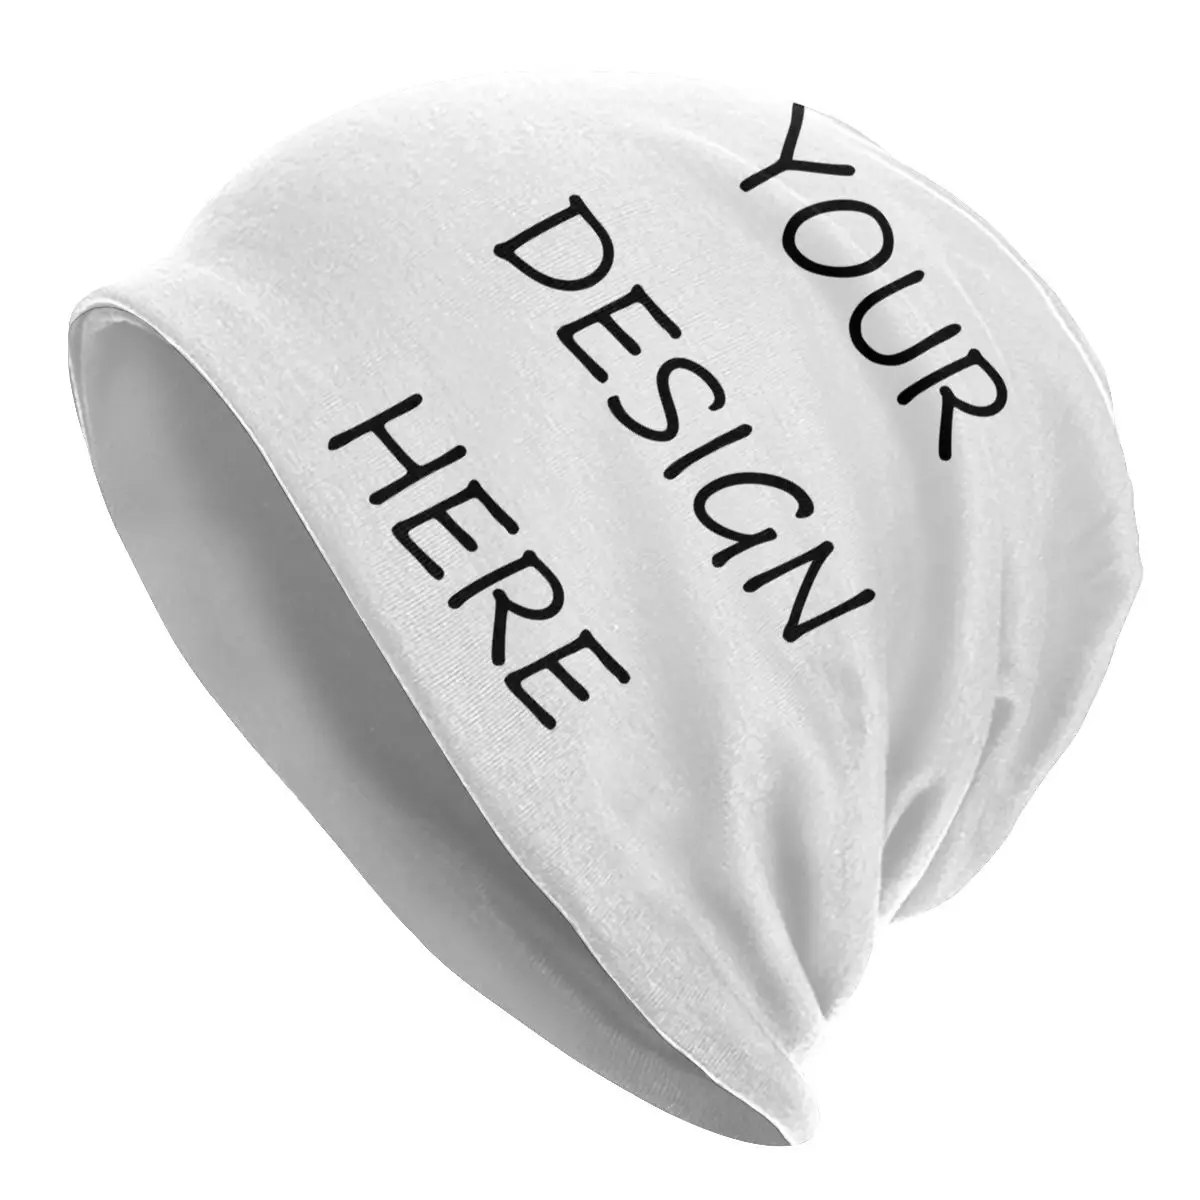 

Winter Warm Knitting Hat Adult Unisex Custom Your Photo Logo Text Print Skullies Beanies Caps Your Design Here DIY Bonnet Hats